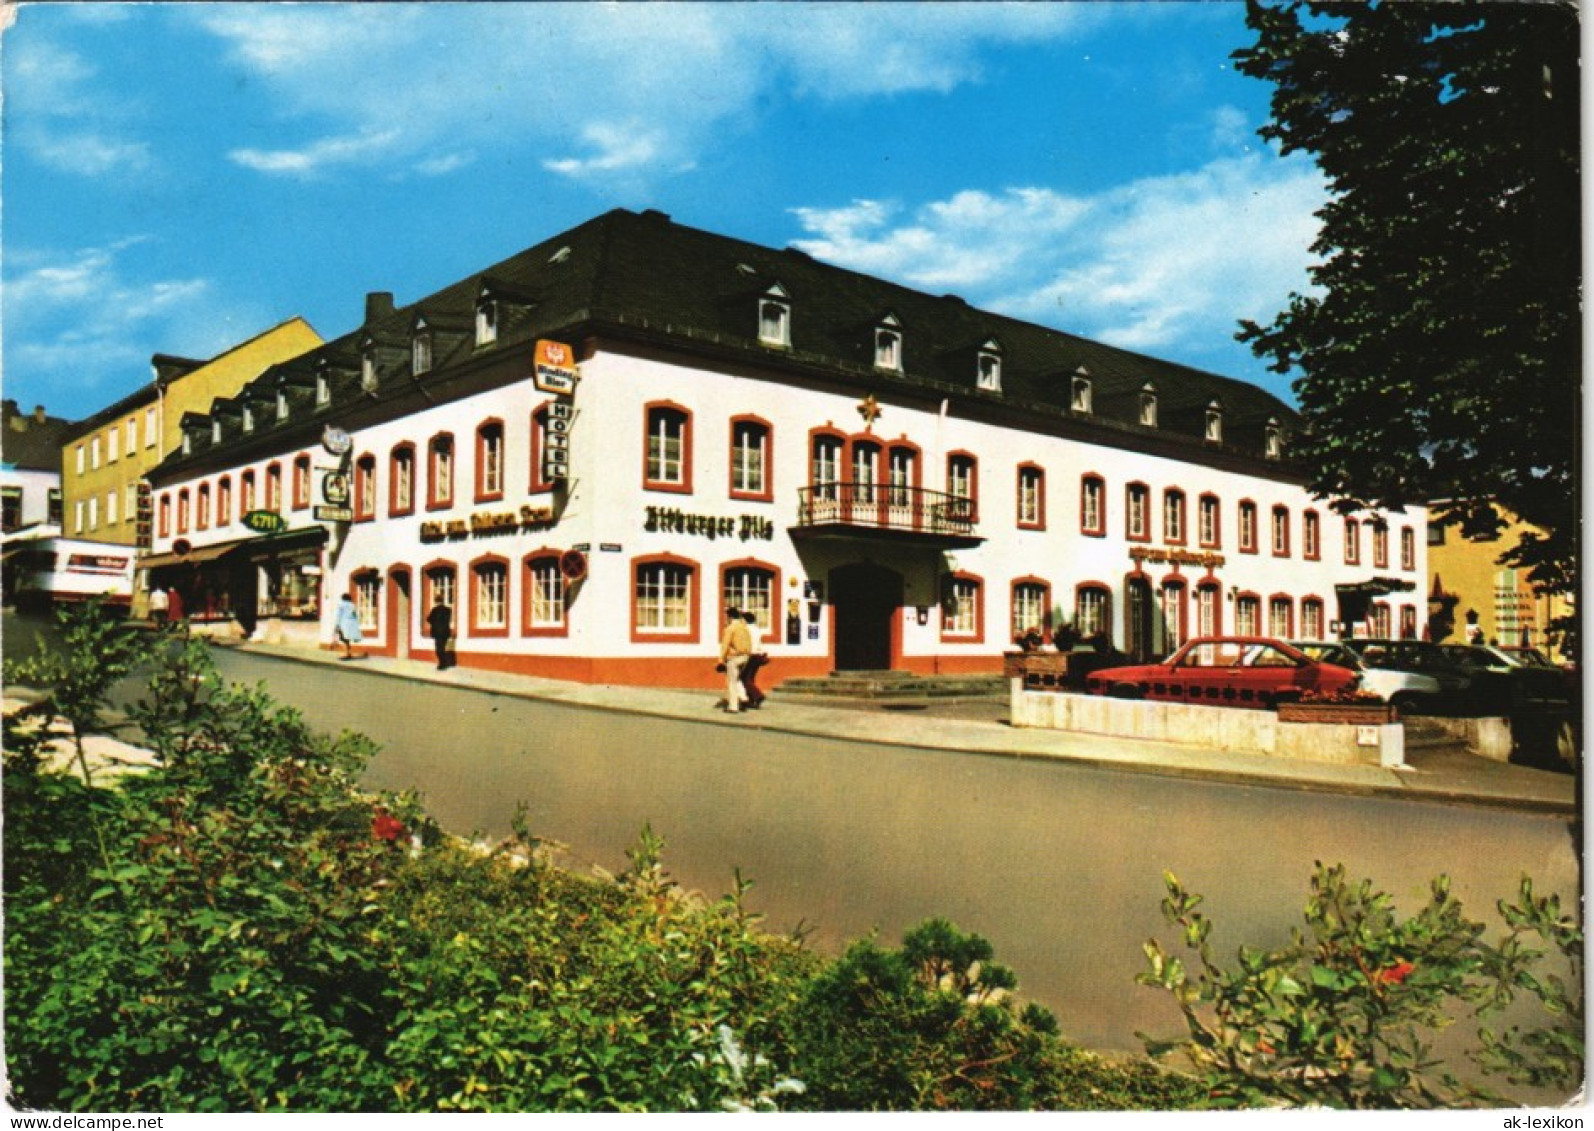 Ansichtskarte Prüm HOTEL Zum Goldenen Stern Bes. Fam. Selbach 1990 - Prüm